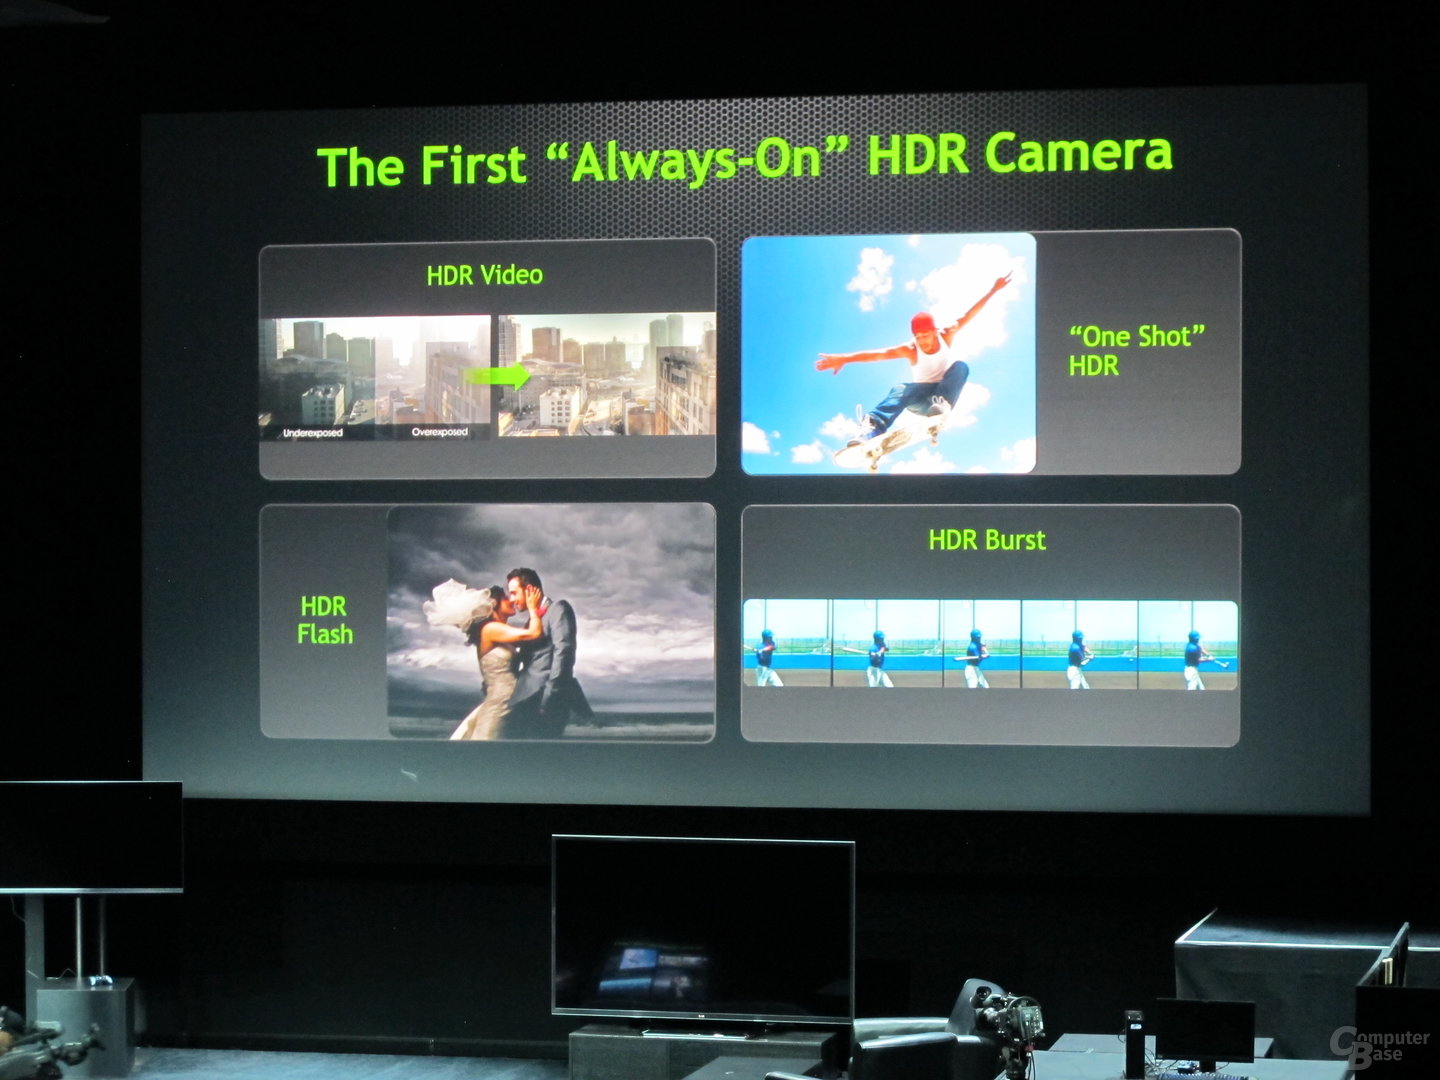 Nvidia Computational Photography Engine